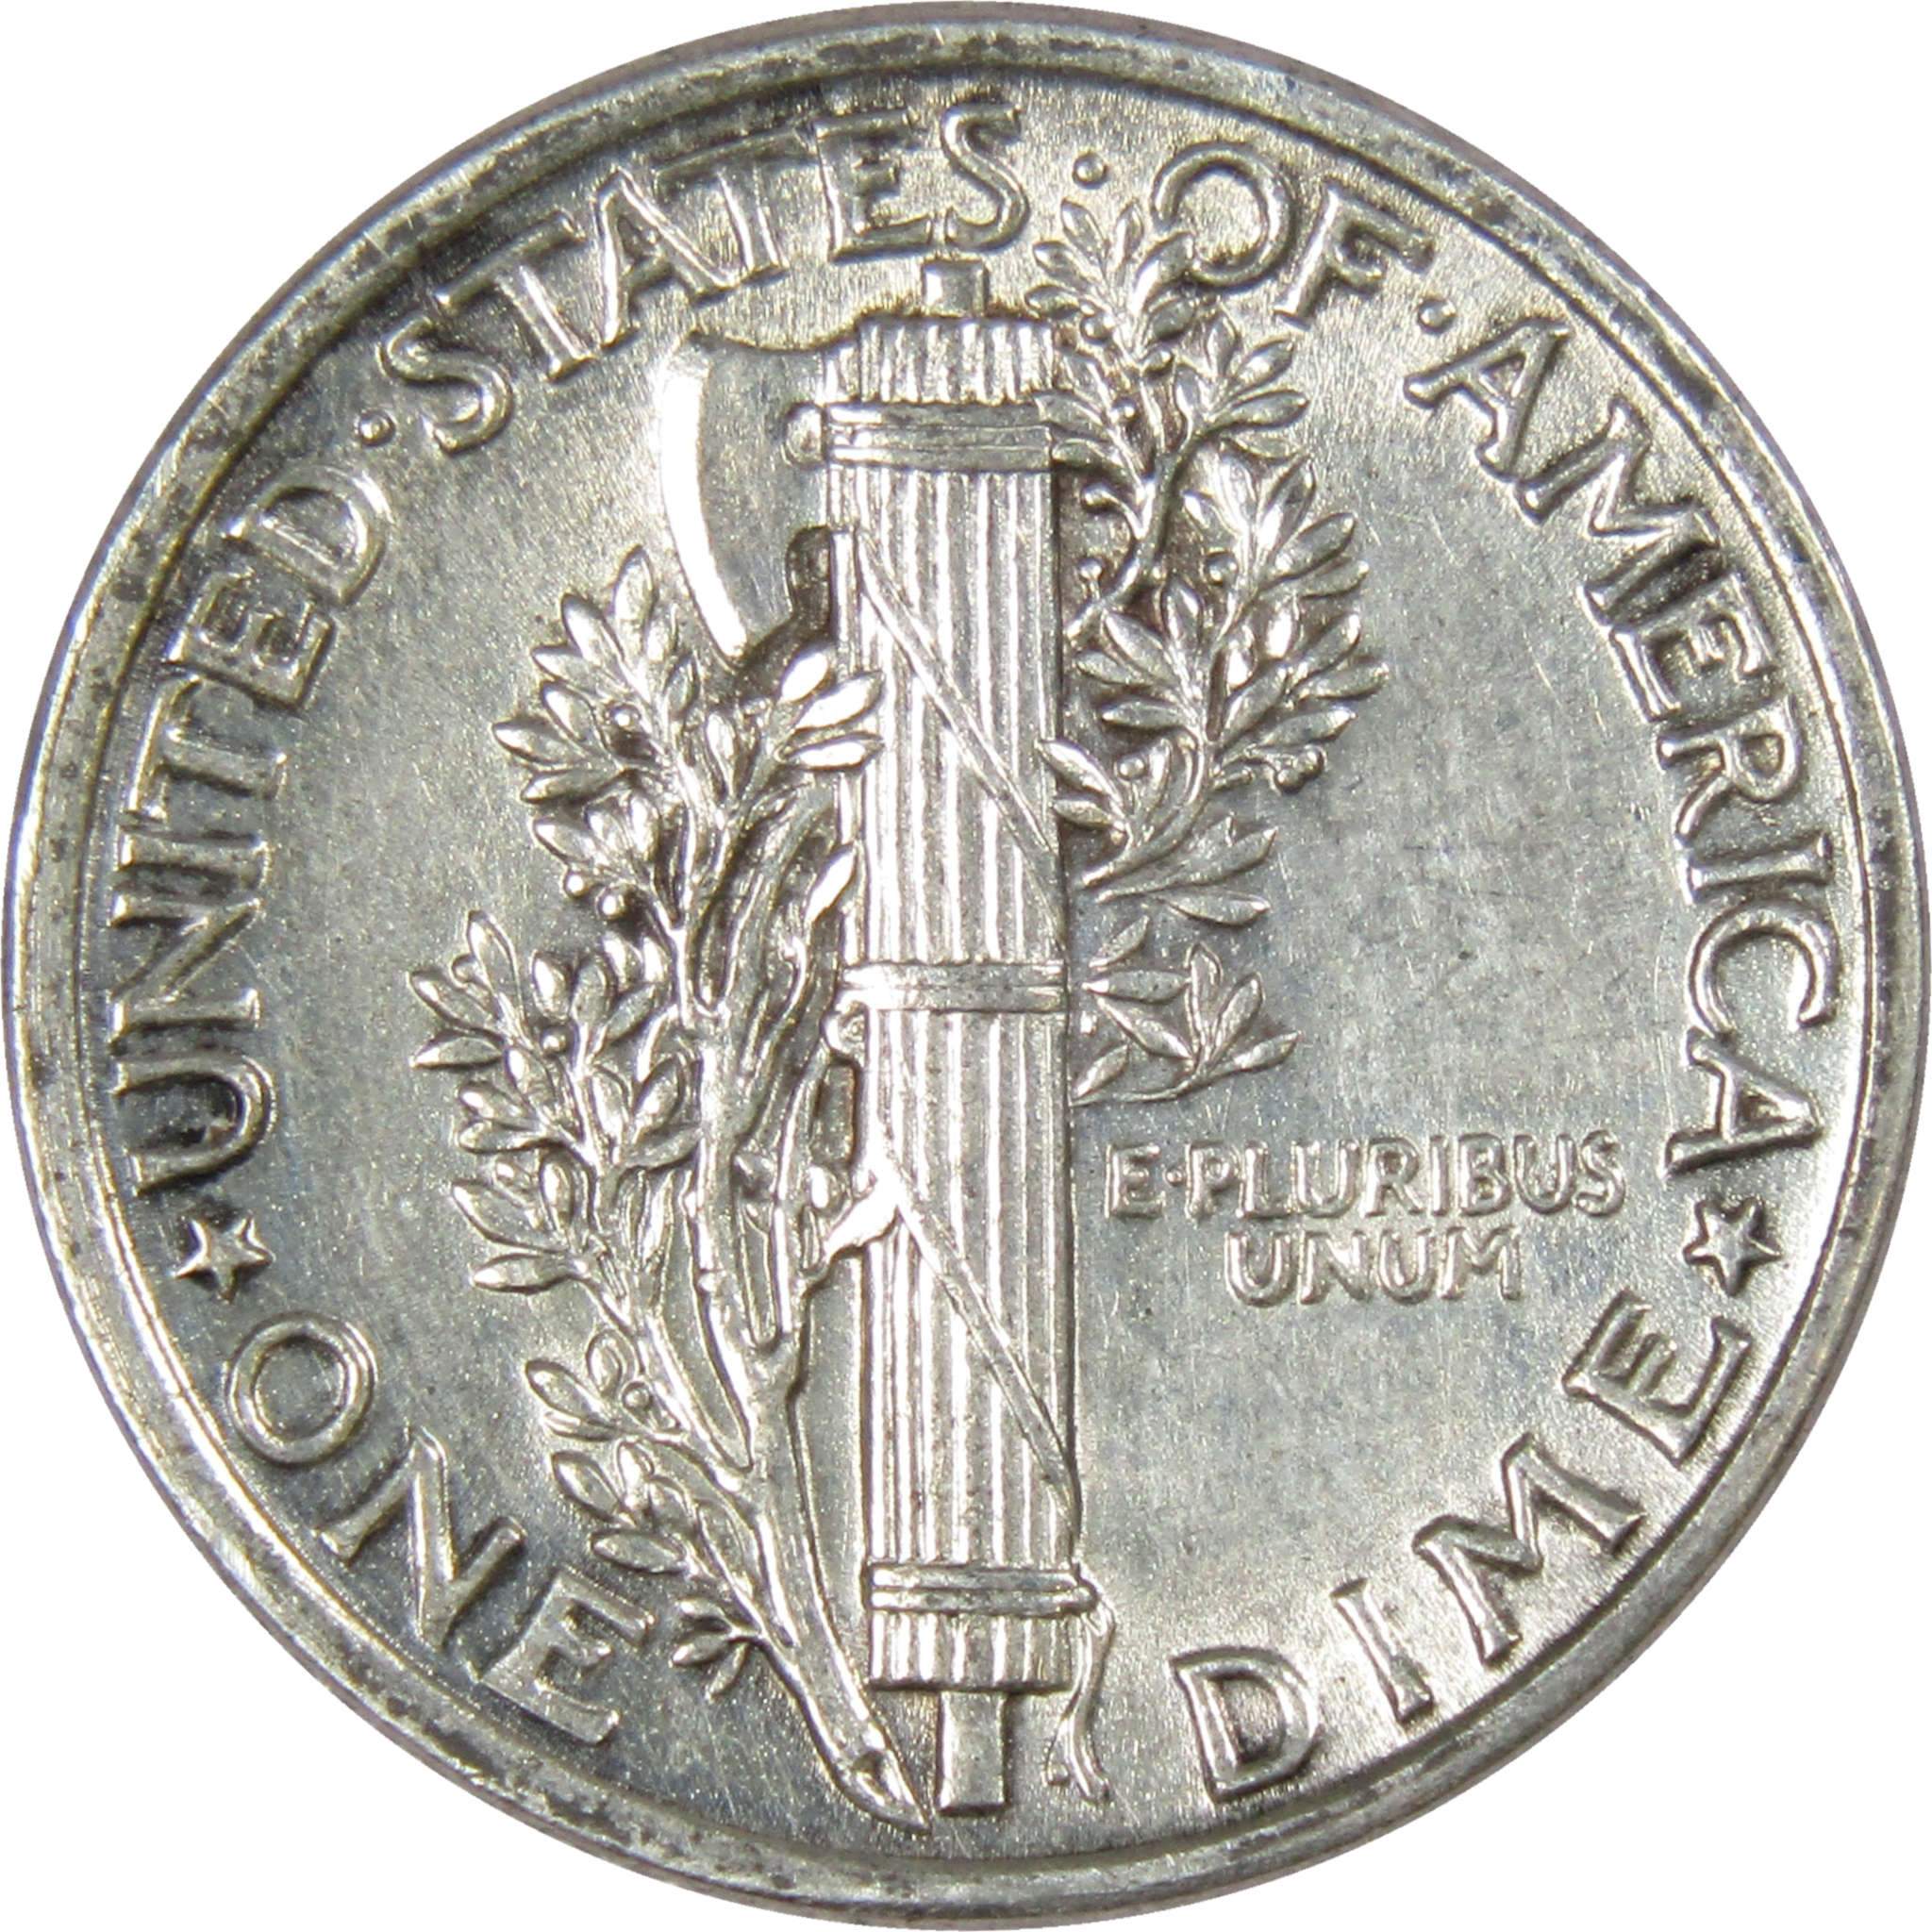 Mercury Dime Random Date AU About Uncirculated 90% Silver 10c US Coin